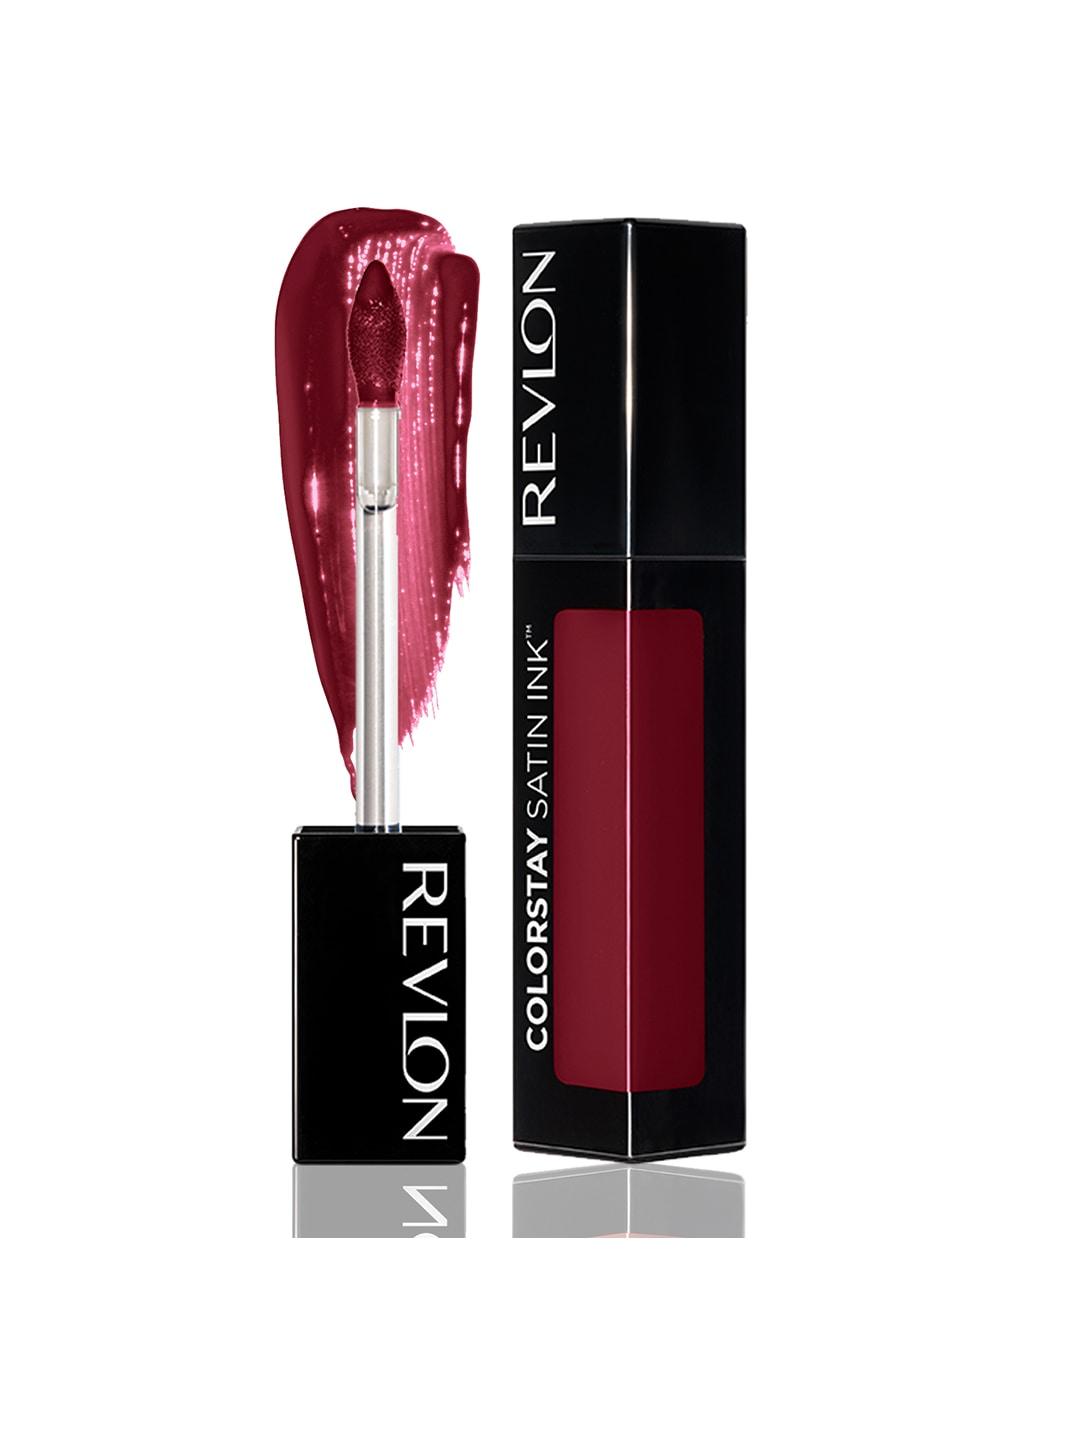 Revlon Colorstay Satin Ink Liquid Lip Color 5 ml - Partner In Wine